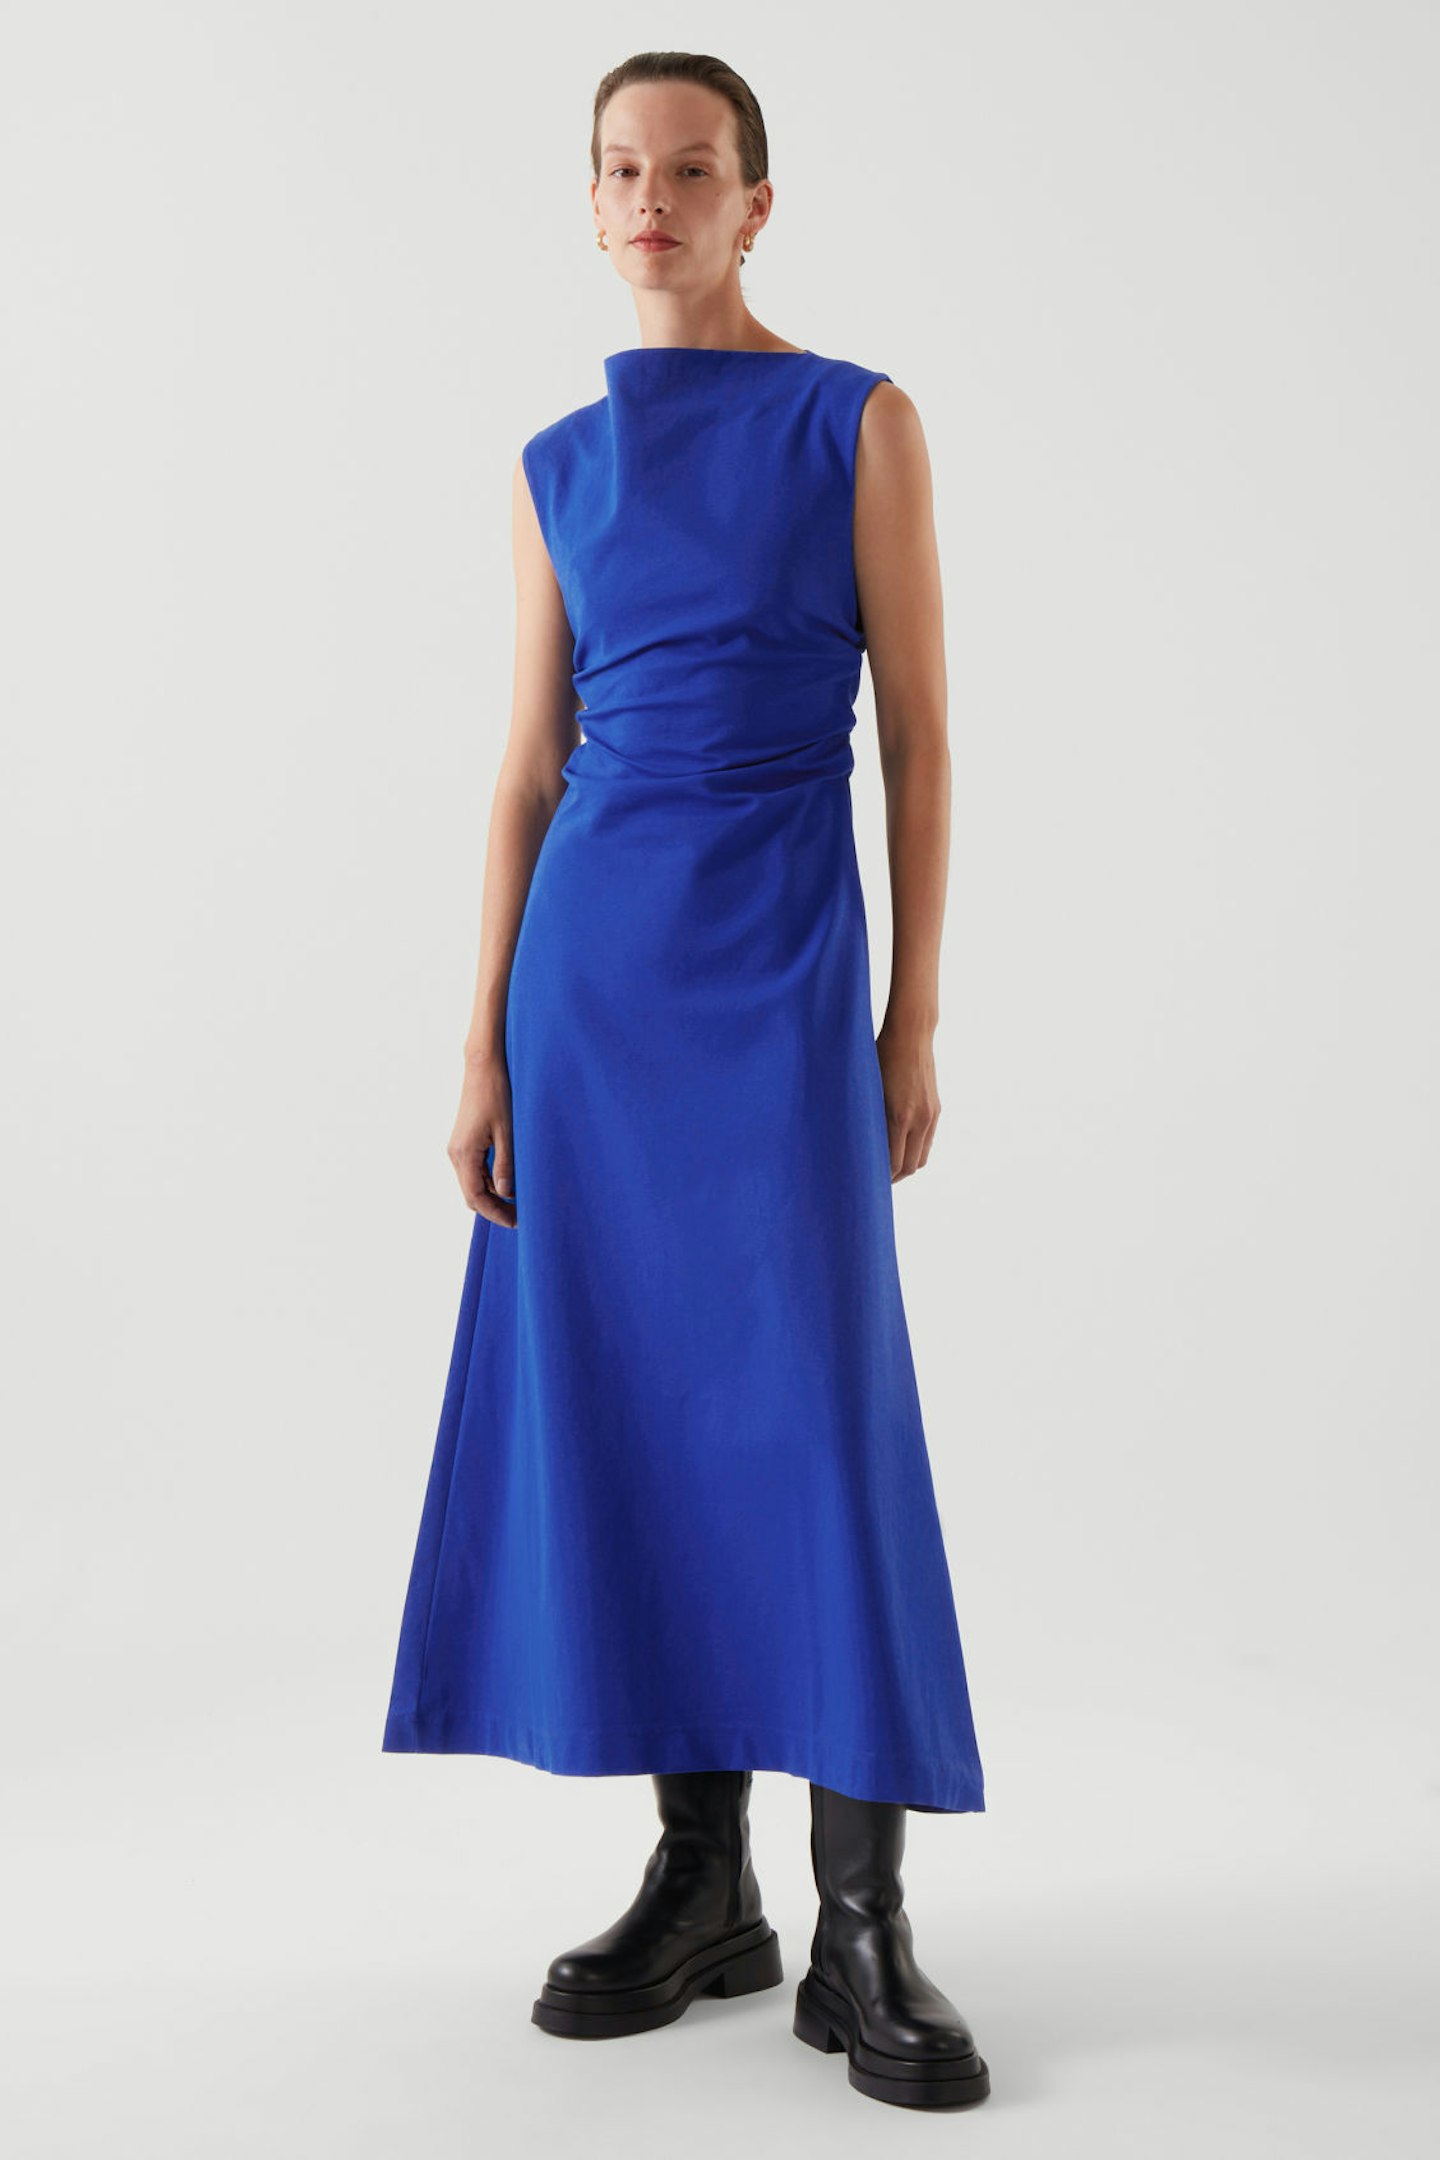 COS, Blue Gathered Midi Dress, £59